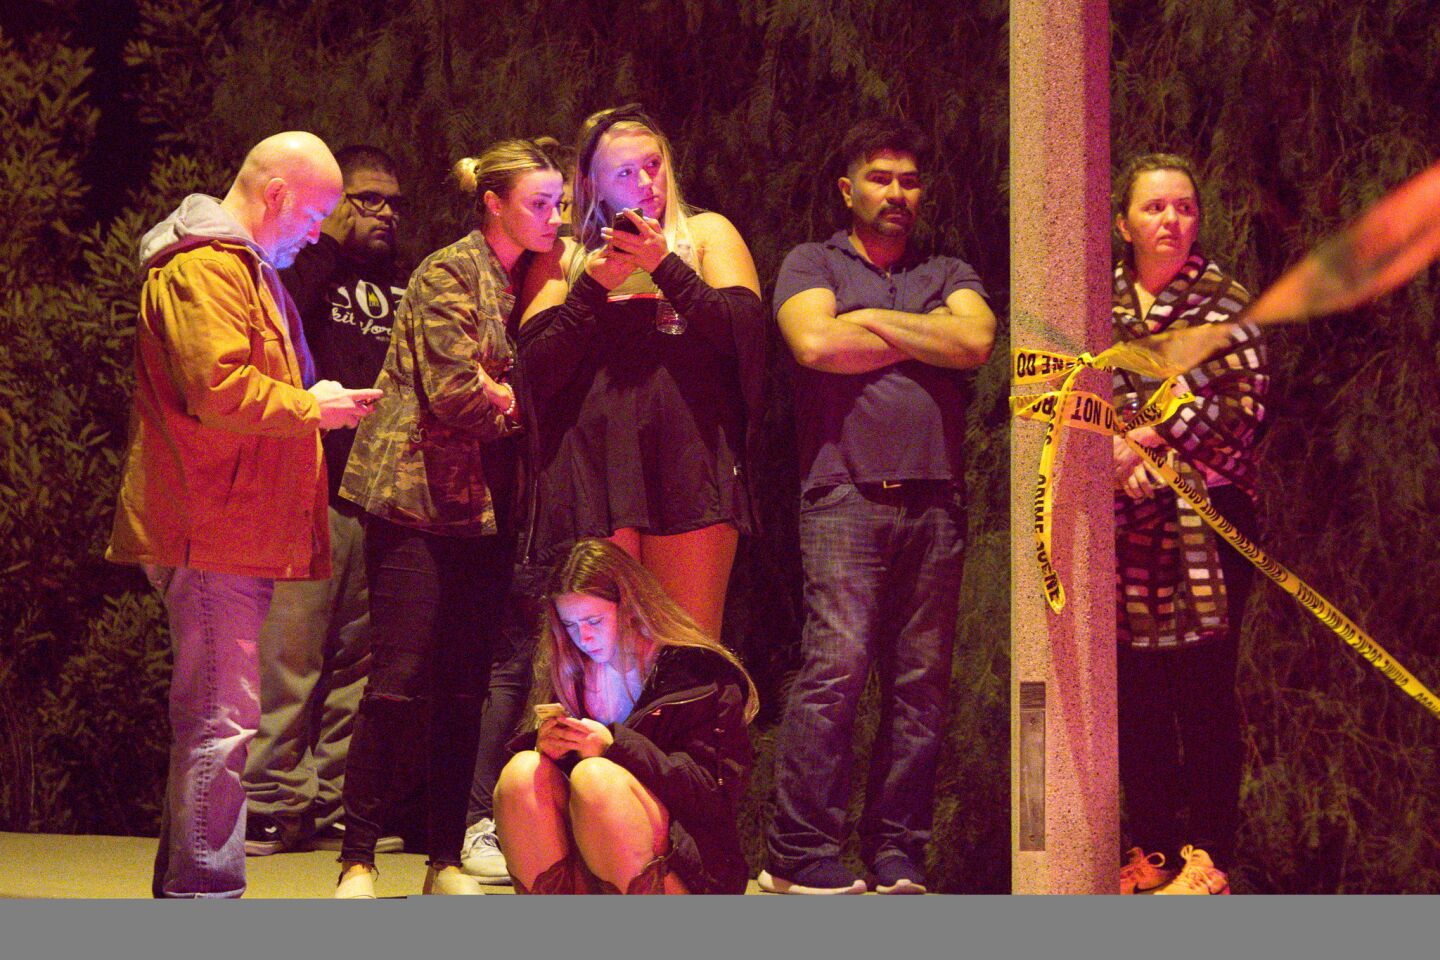 People hug following the shooting.